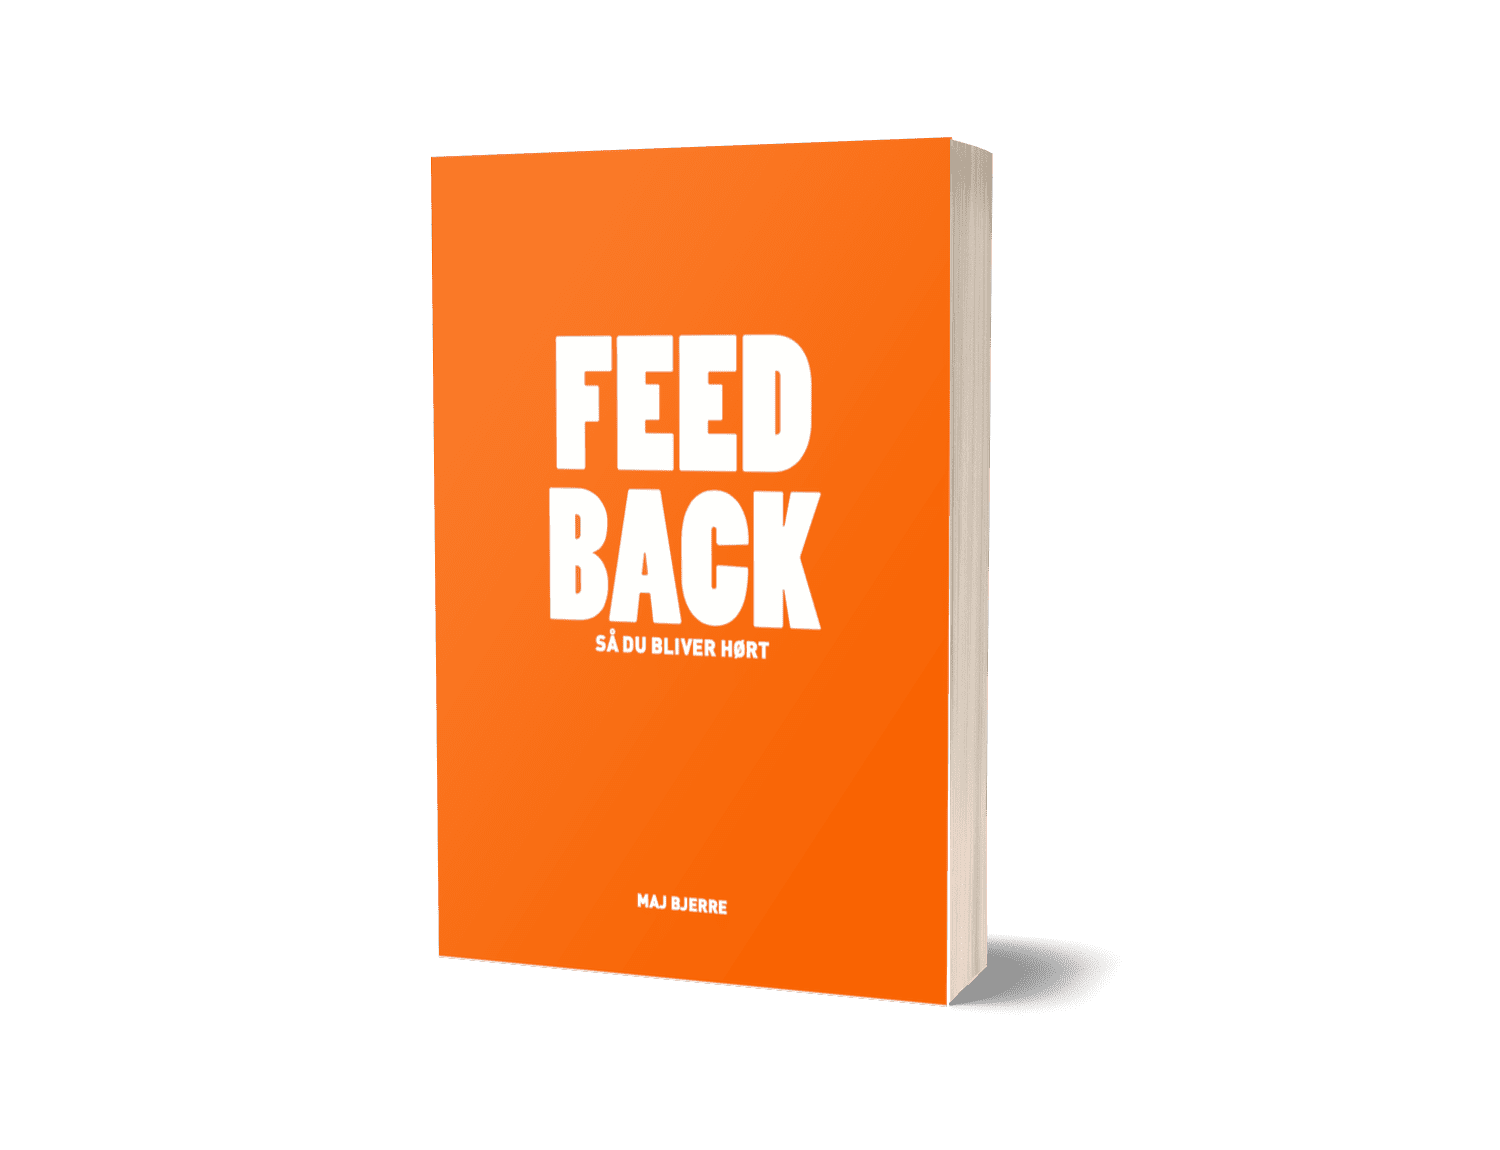 Bog om at give brugbar feedback